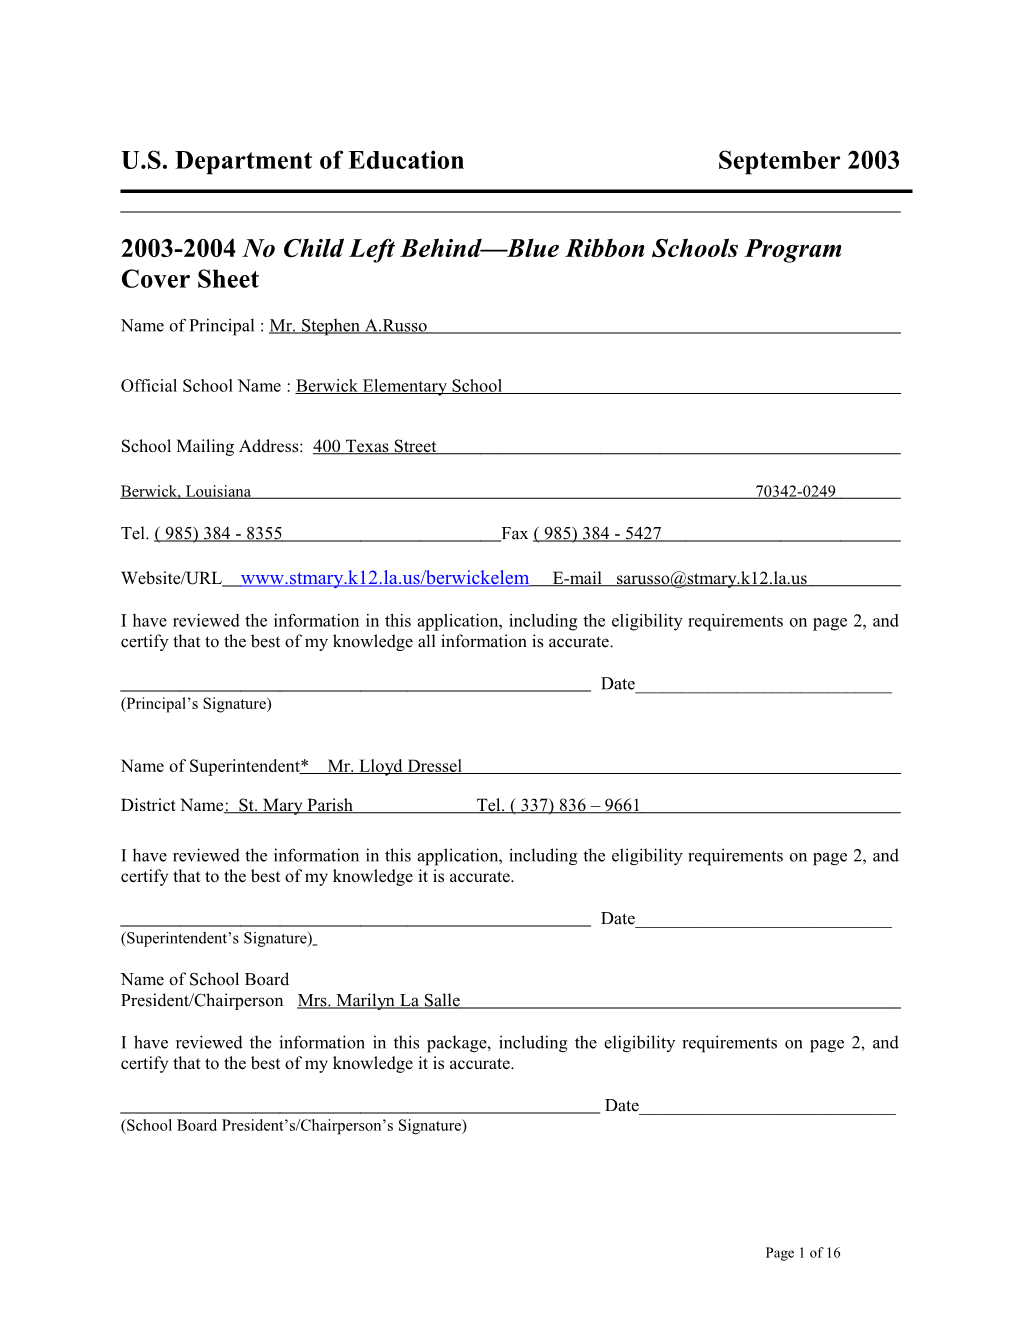 Berwick Elementary School 2004 No Child Left Behind-Blue Ribbon School Application (Msword)